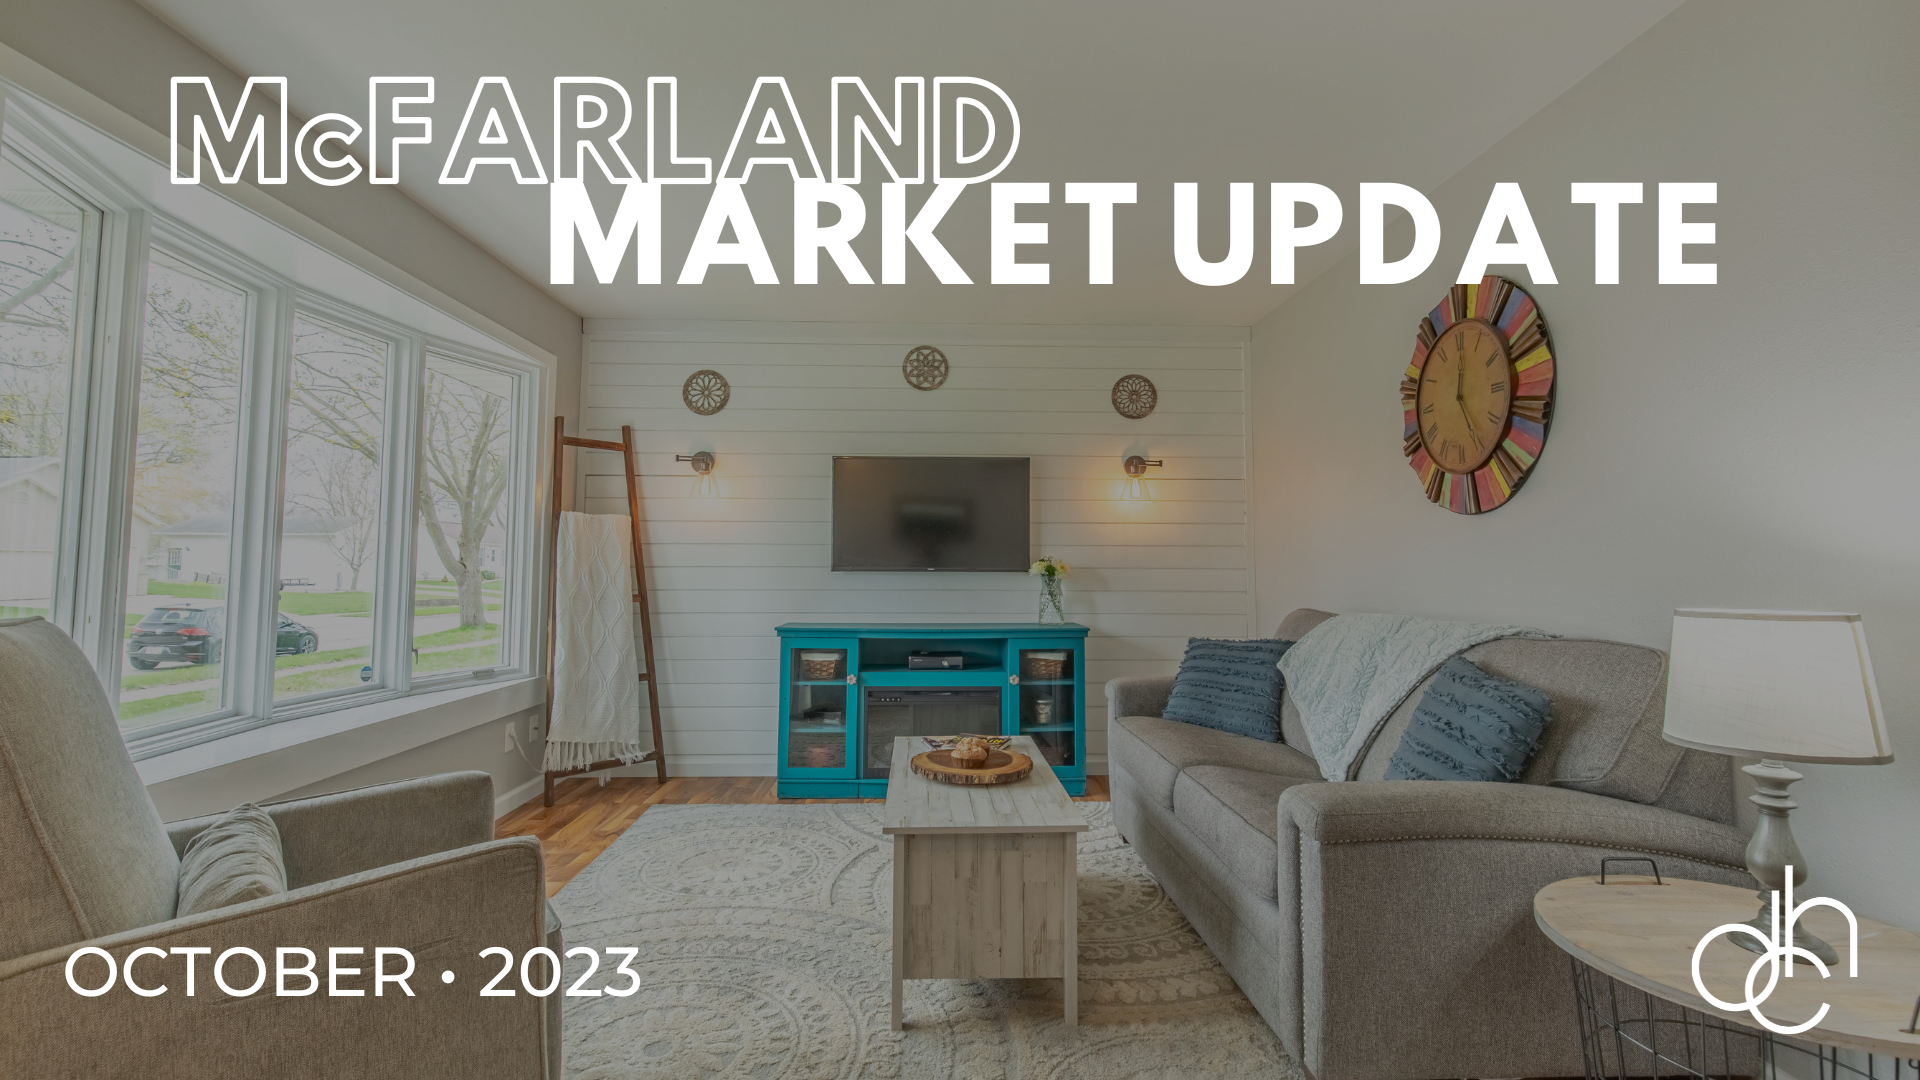 October 2023 McFarland Market Report